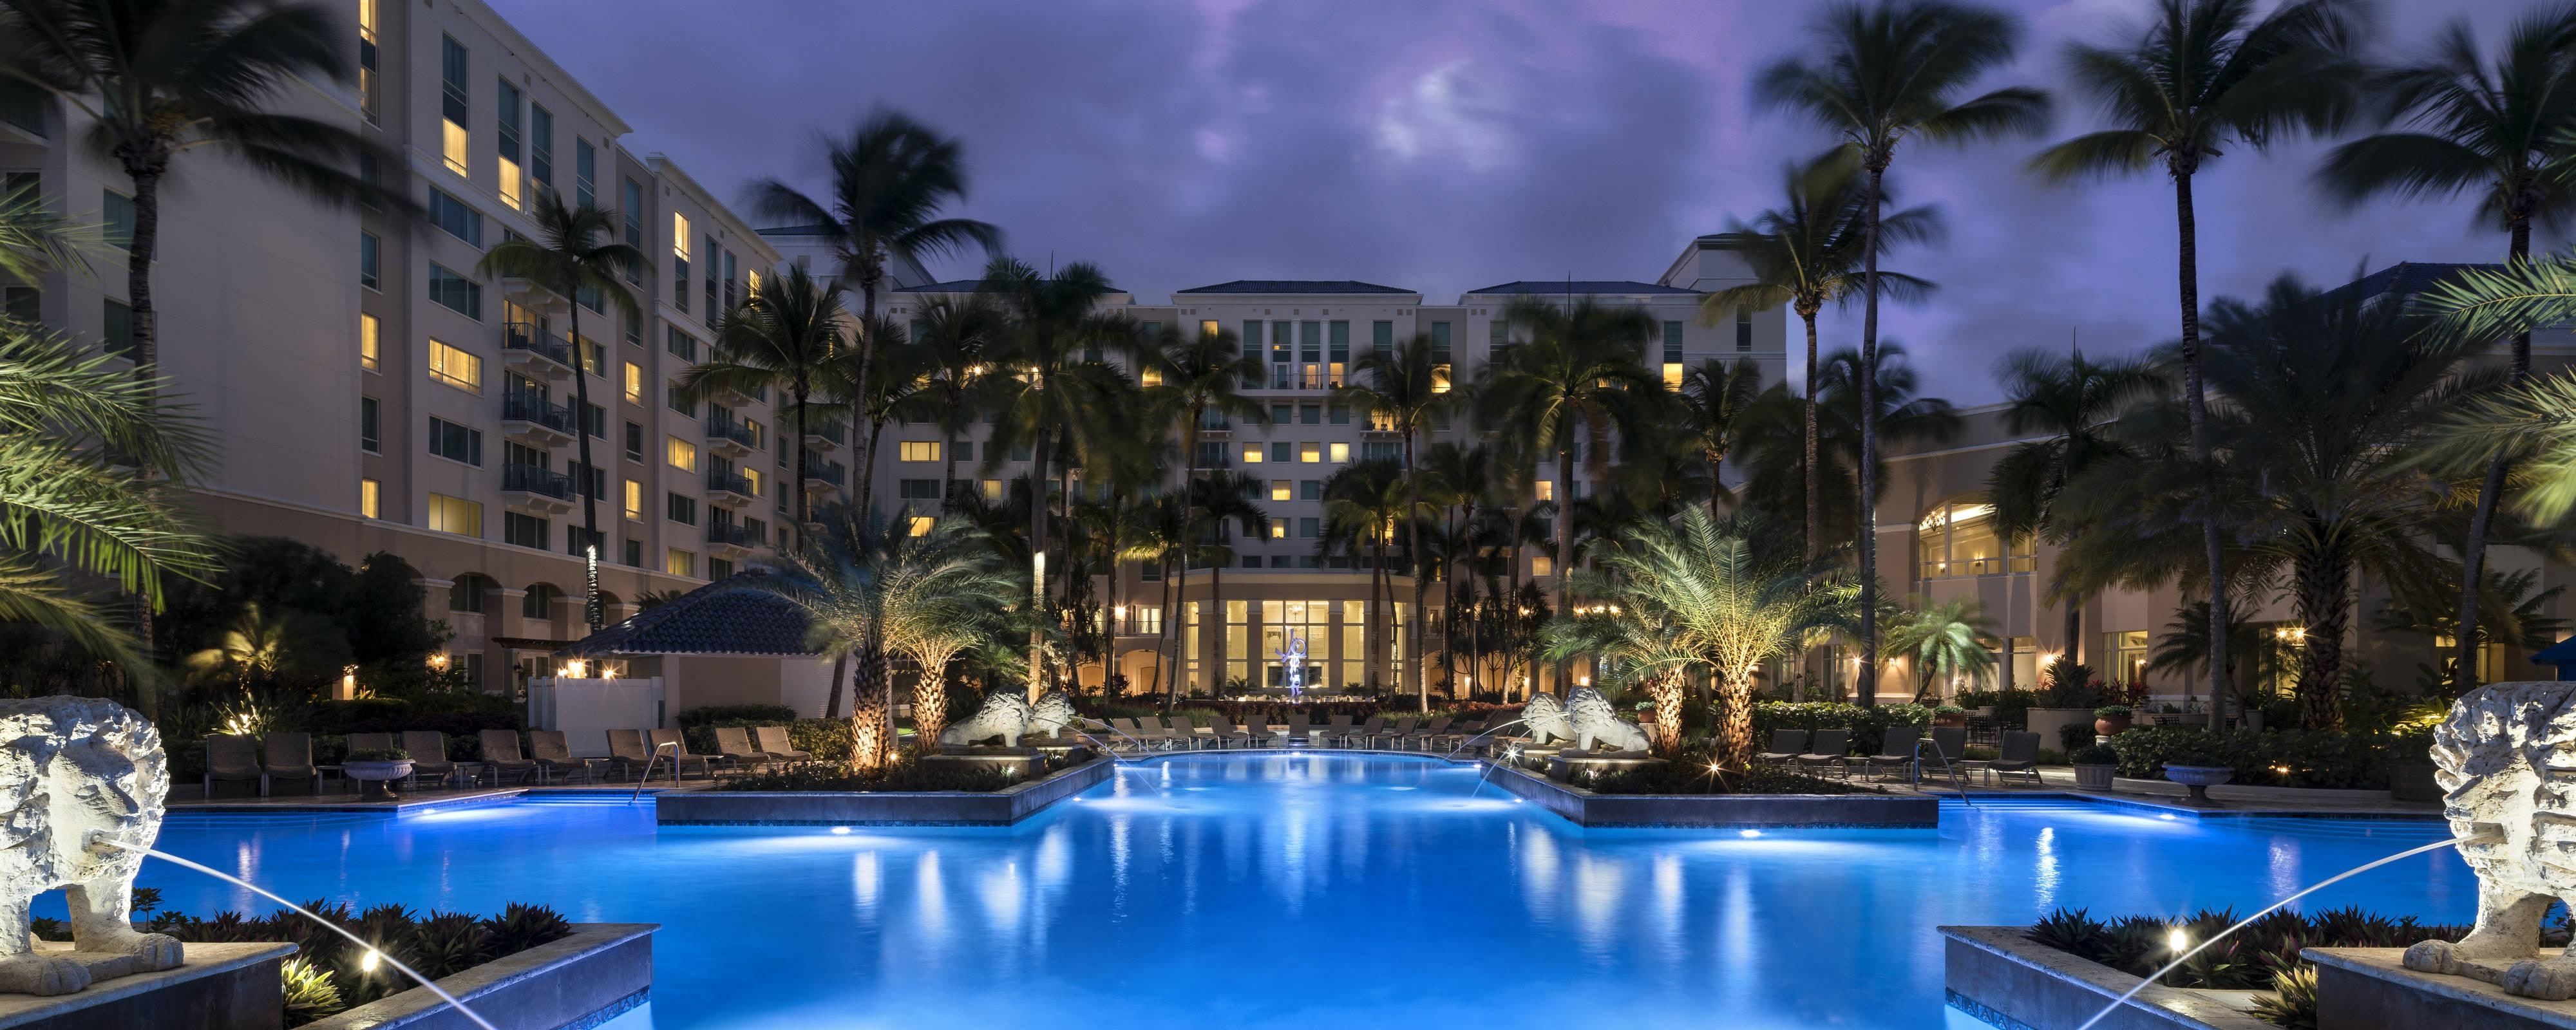 Image for The Ritz-Carlton, San Juan, a Marriott hotel.